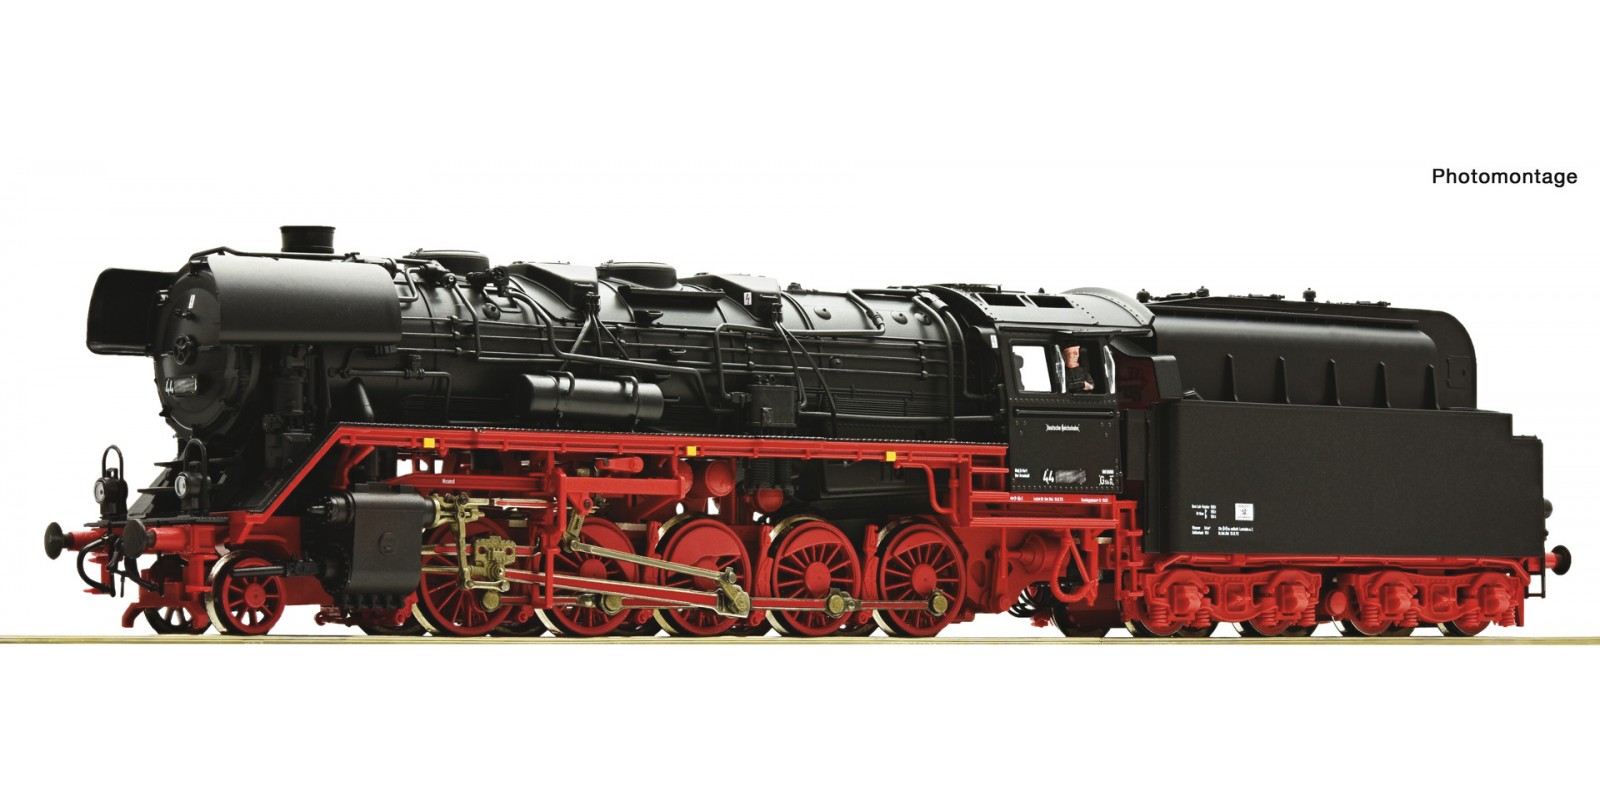 RO78283 Steam locomotive class 44, DR